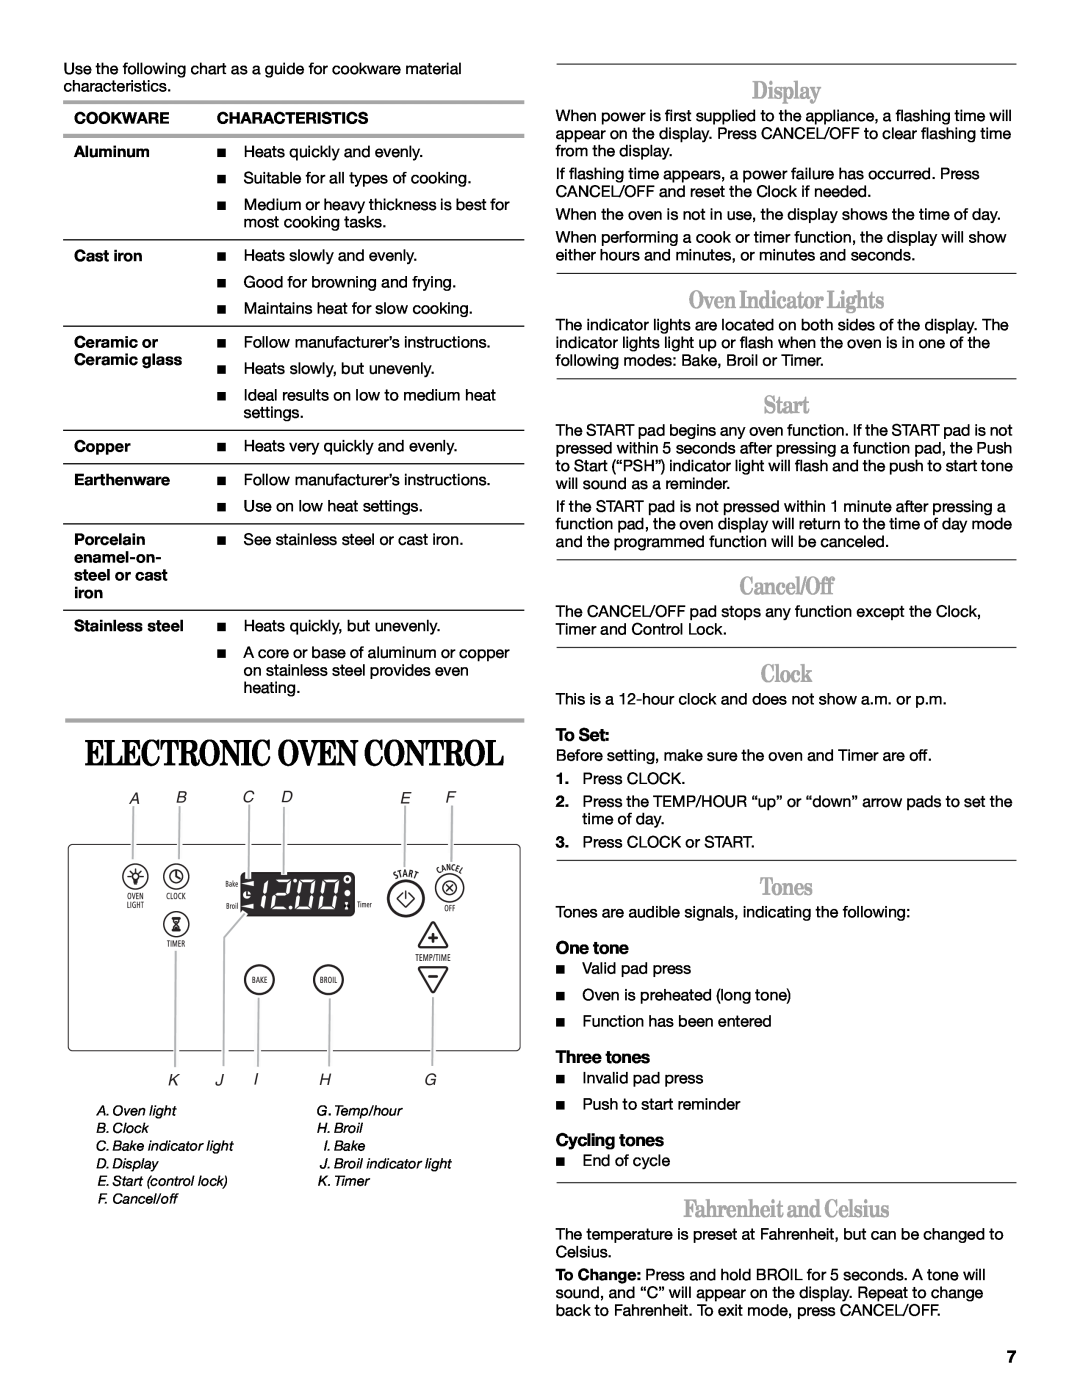 Whirlpool WFG231LVB manual Electronic Oven Control, Display, OvenIndicatorLights, Start, Cancel/Off, Clock, Tones, To Set 